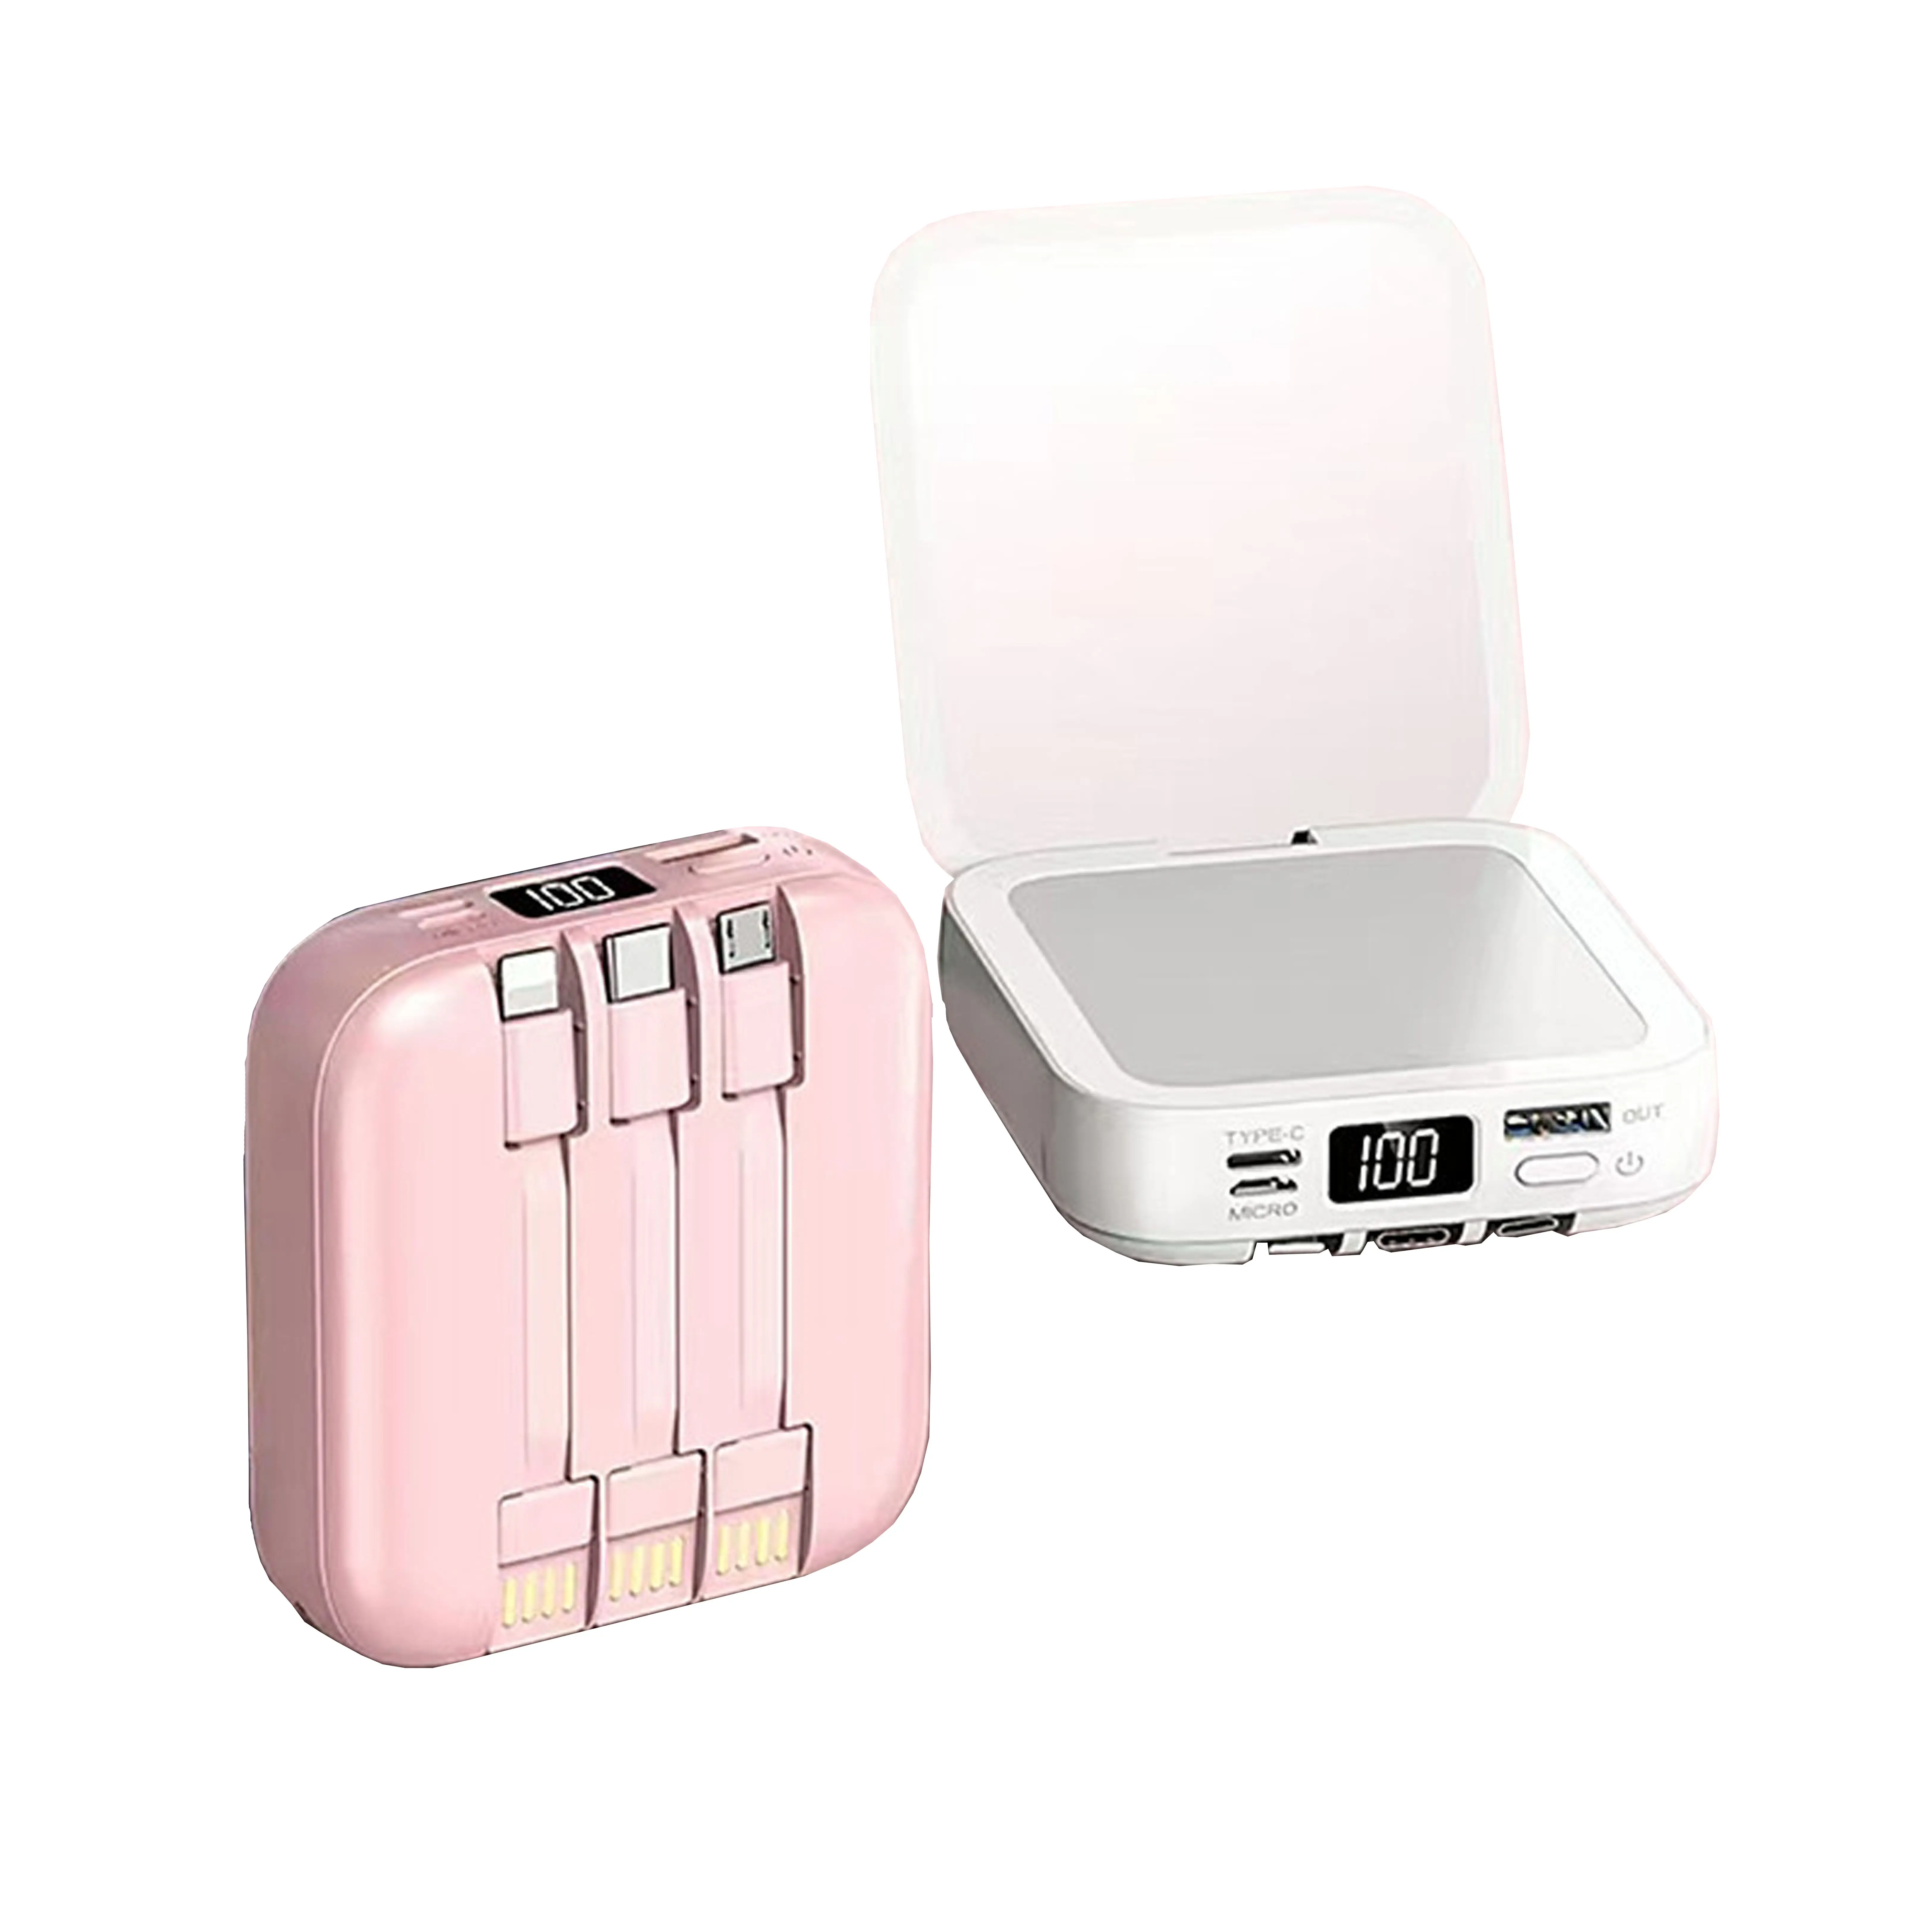 Wholesale cosmetic mirror Portable Power bank 10000mah for iPhone iPad iPod Samsung HTC Blackberry etc